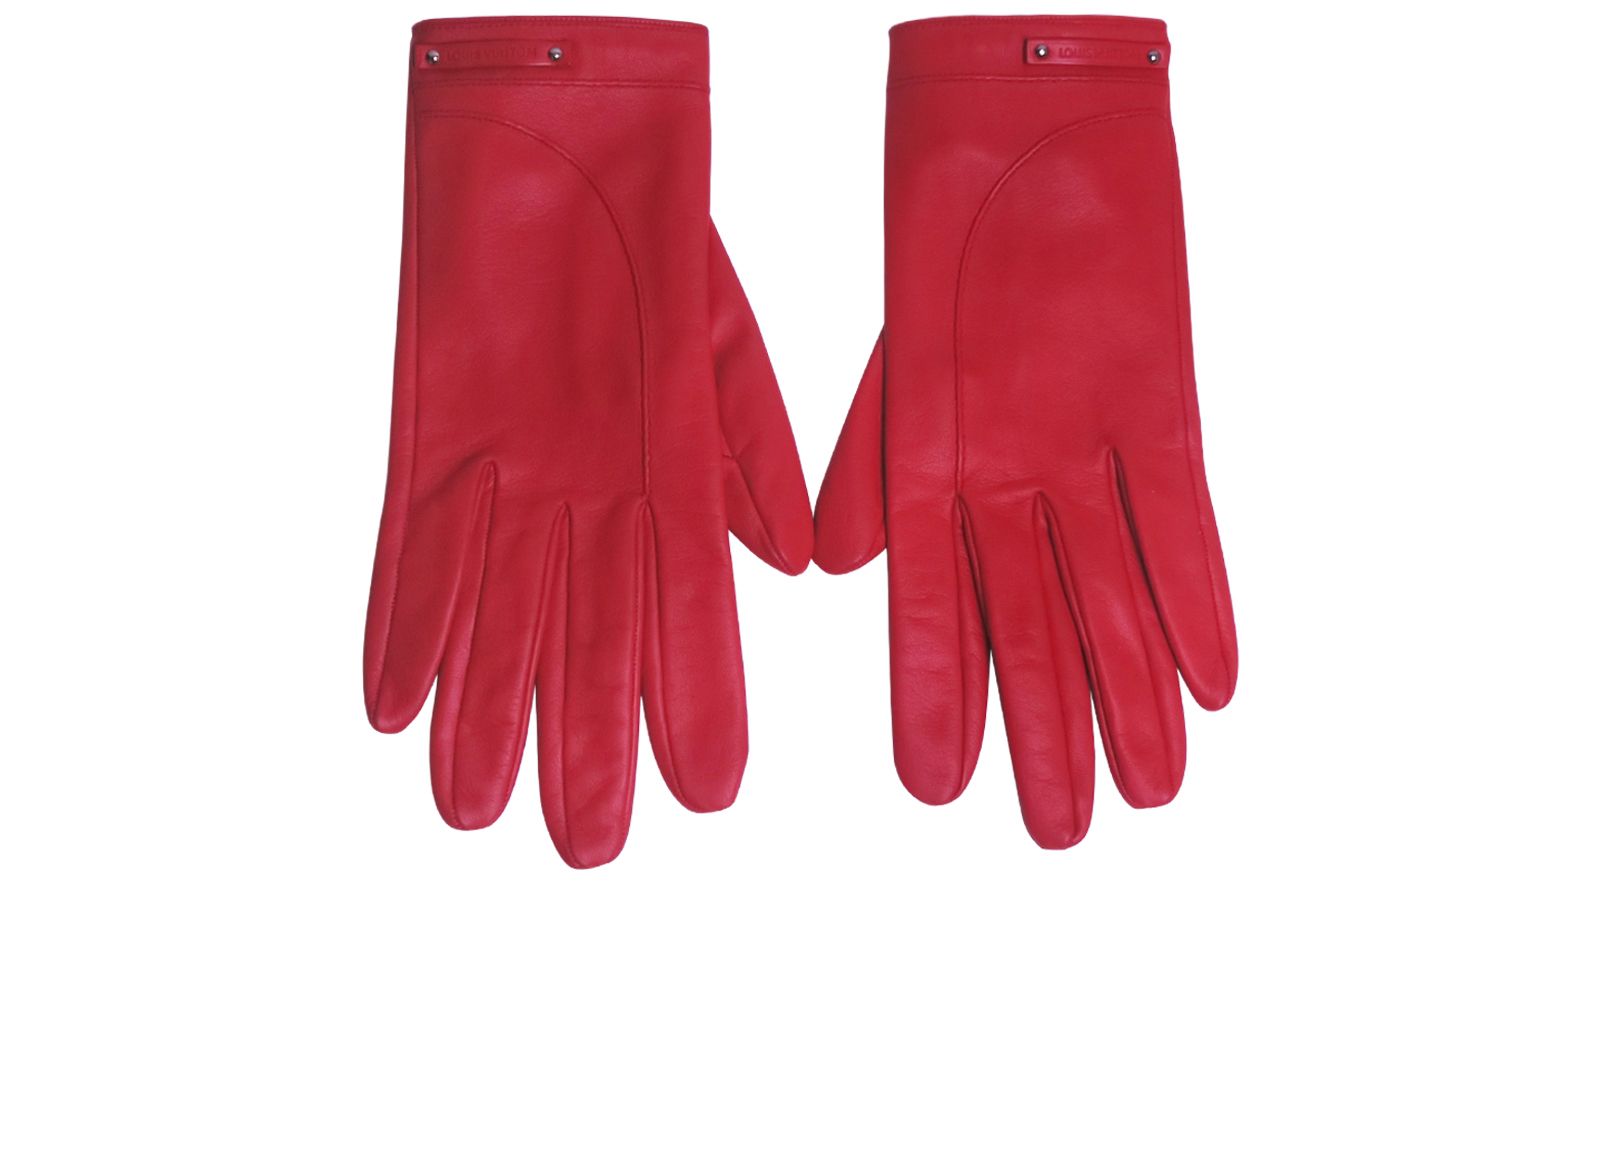 Louis Vuitton Gloves - Size L, Small Leather Goods - Designer